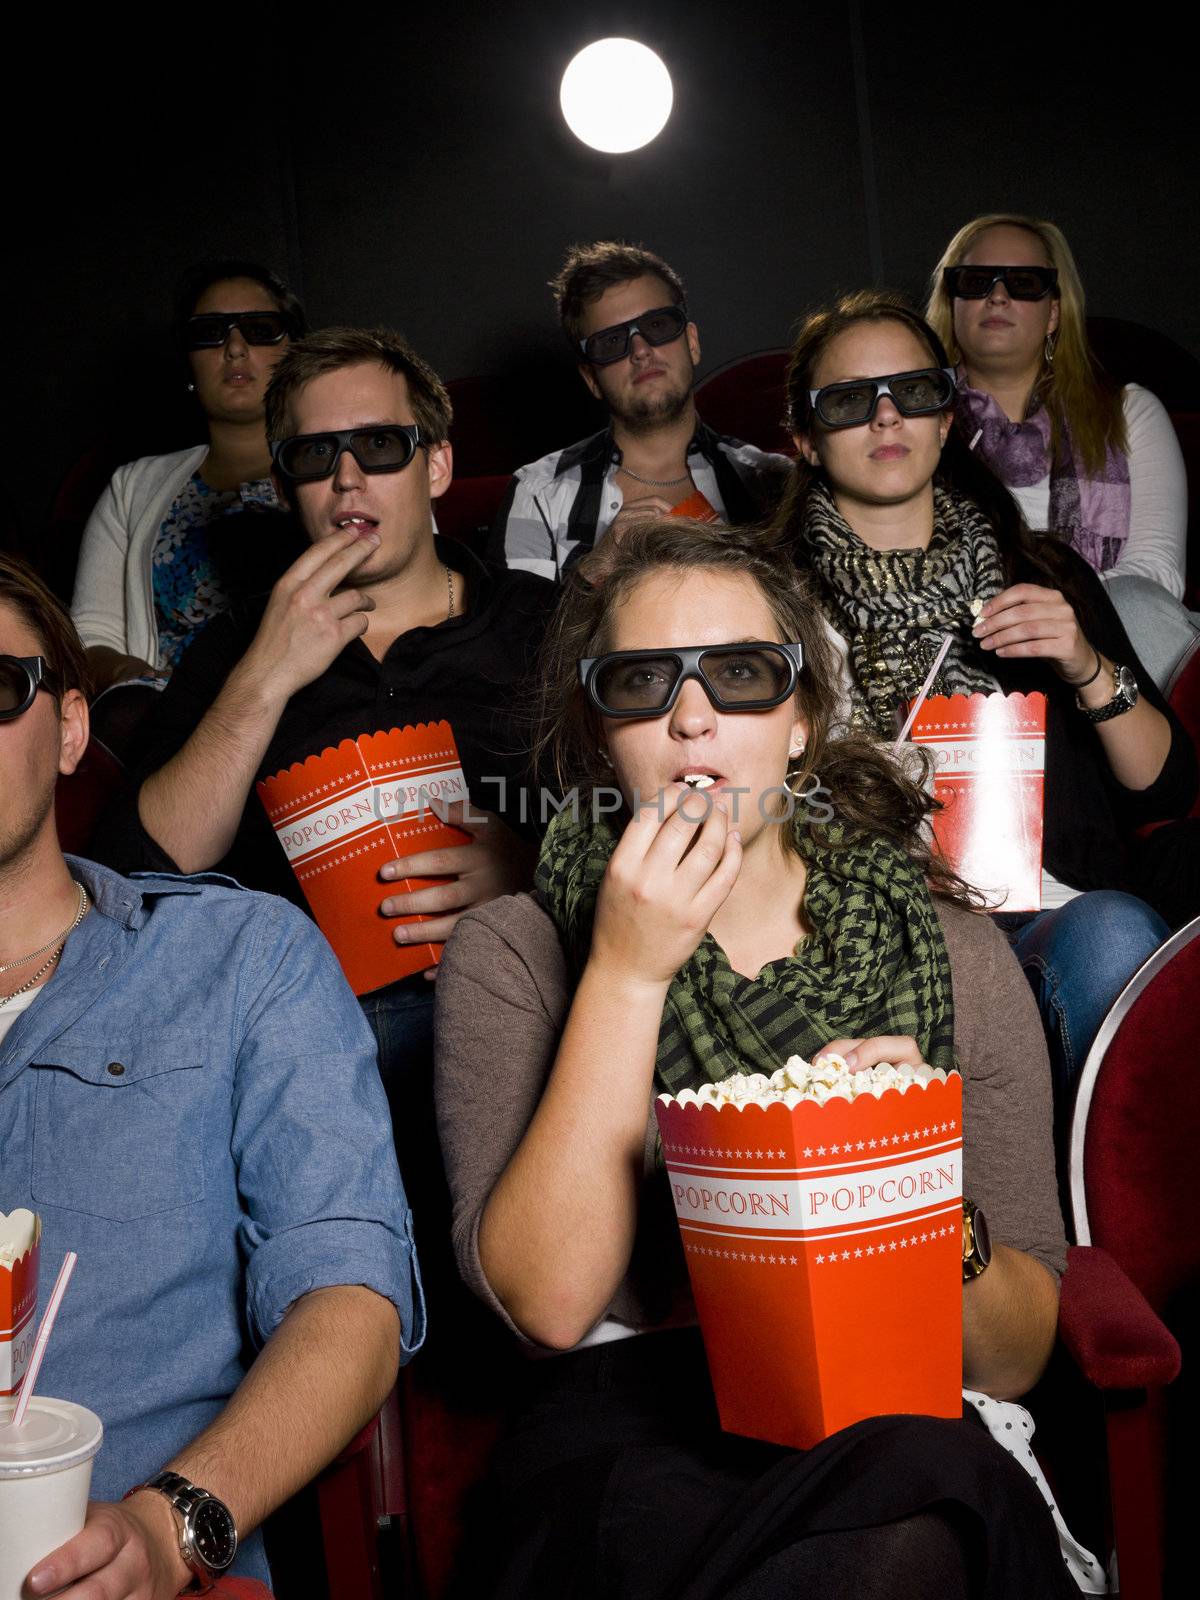 Eating popcorn at the cinema by gemenacom